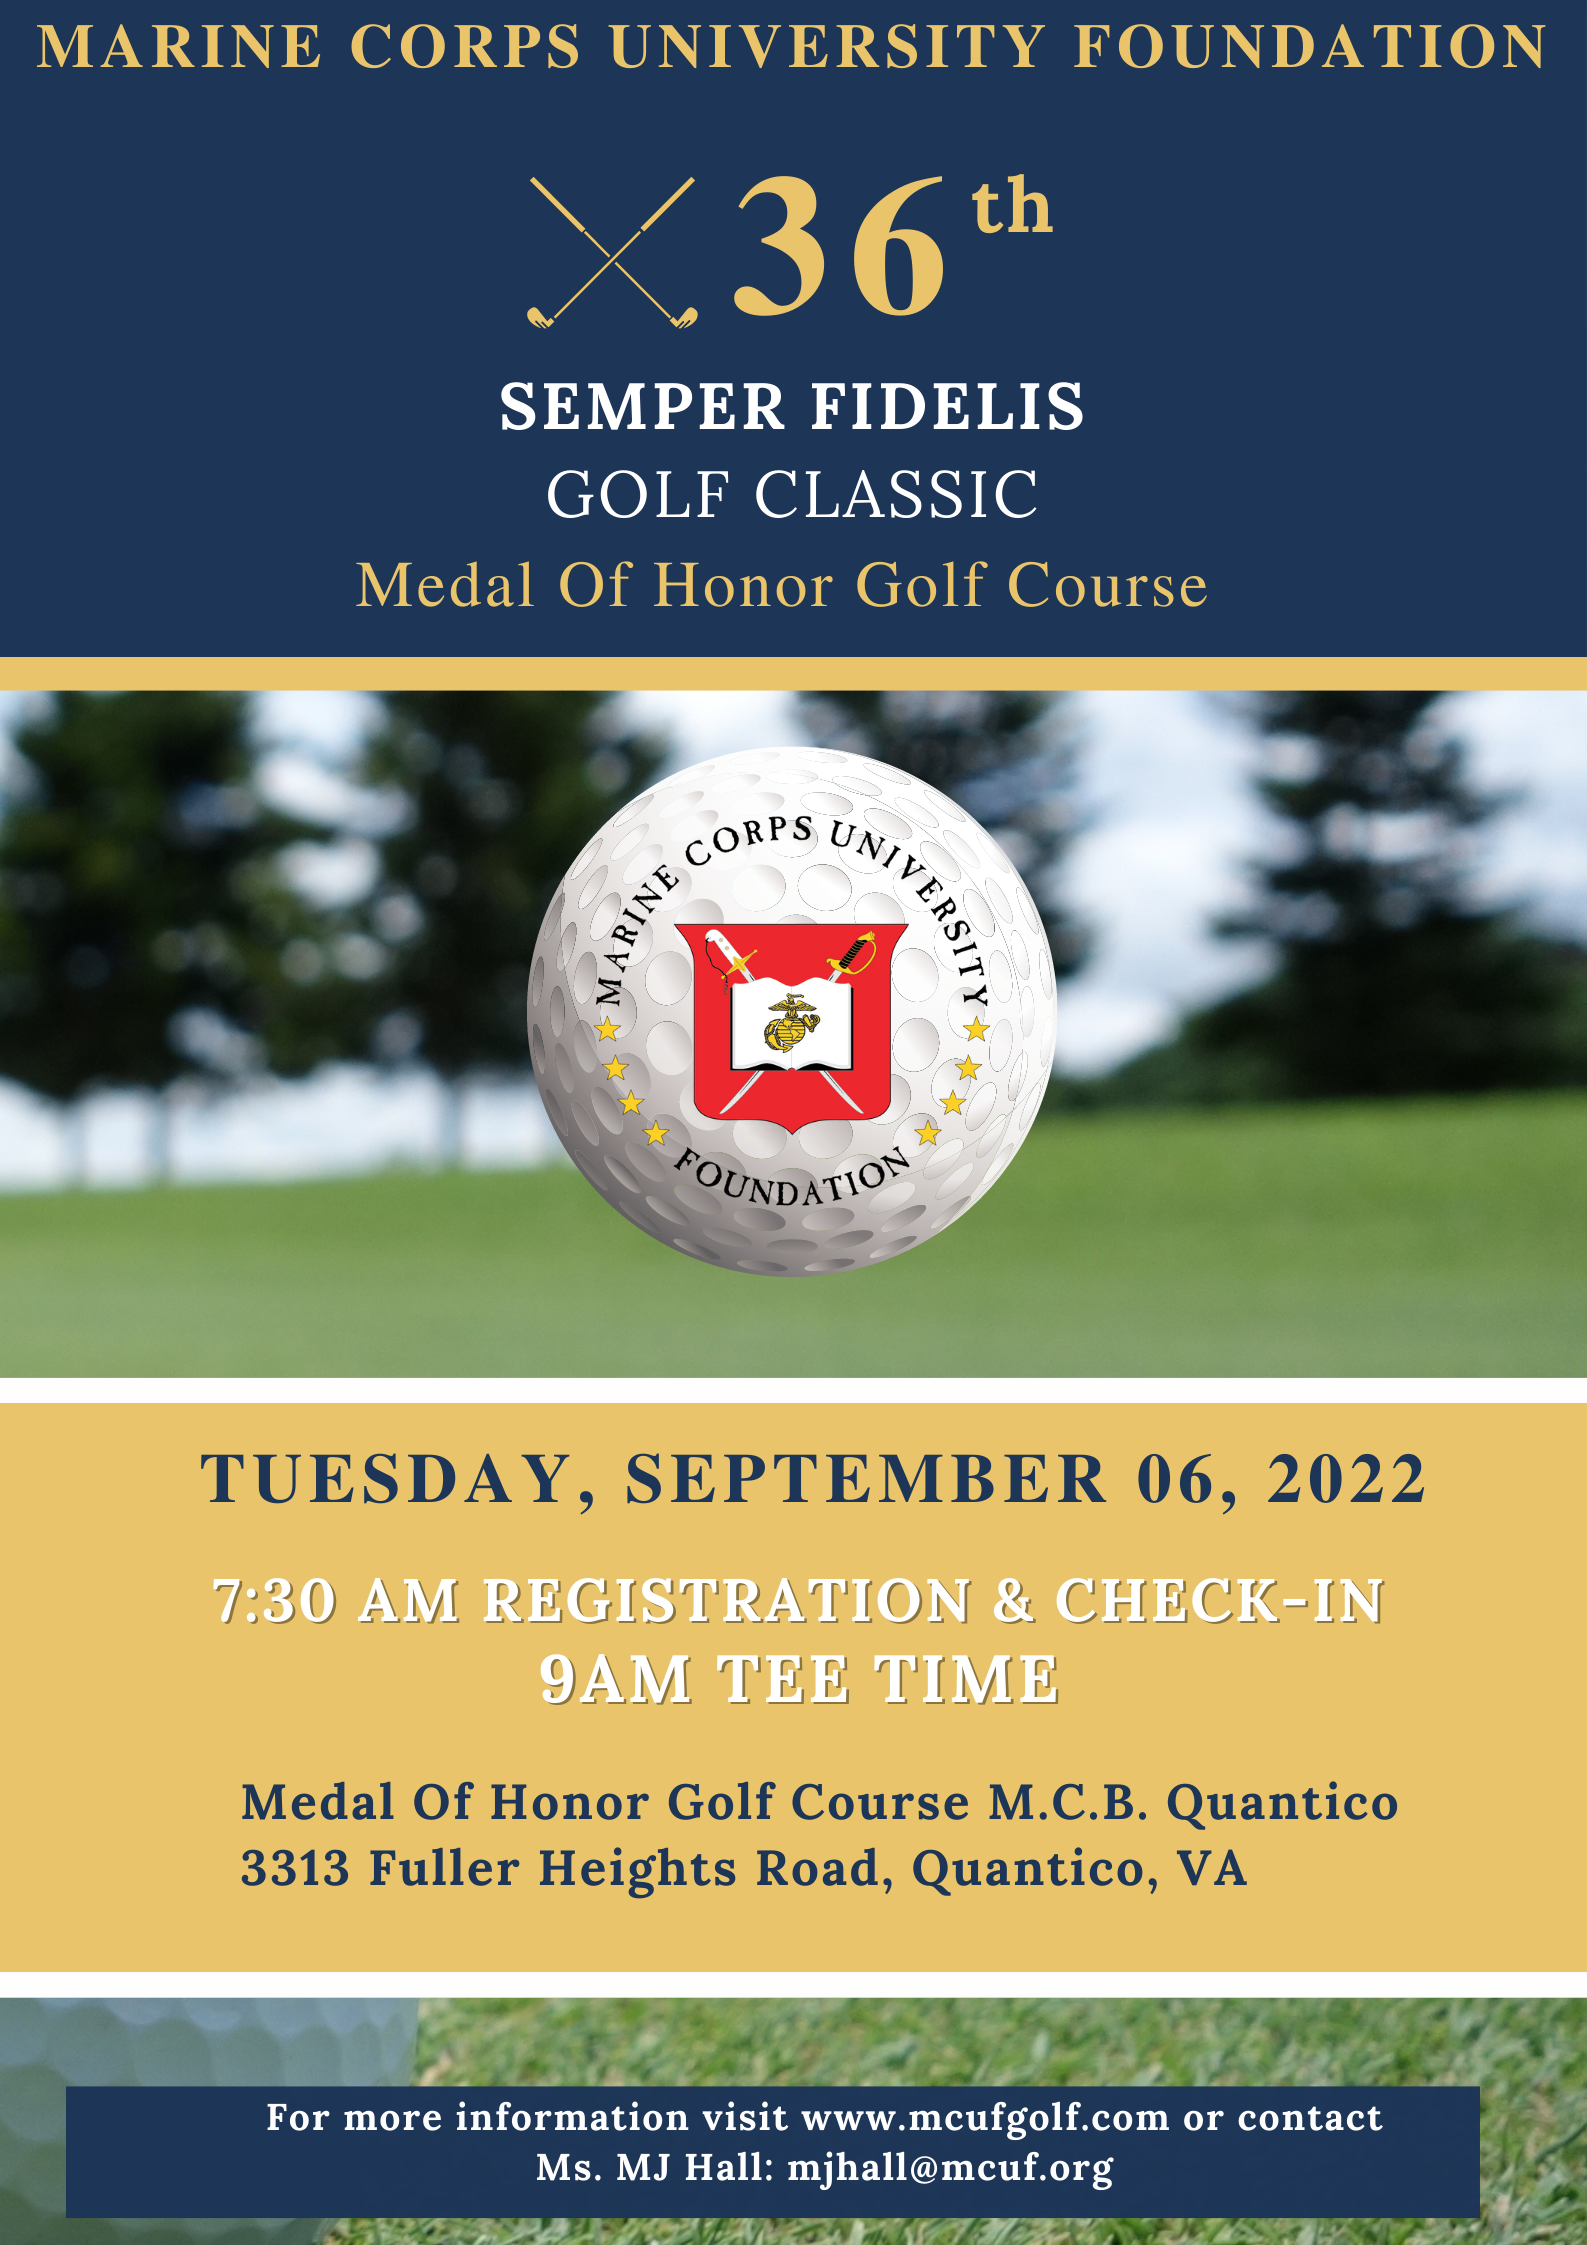 Registration open for the 2022 Semper Fidelis Golf Classic!